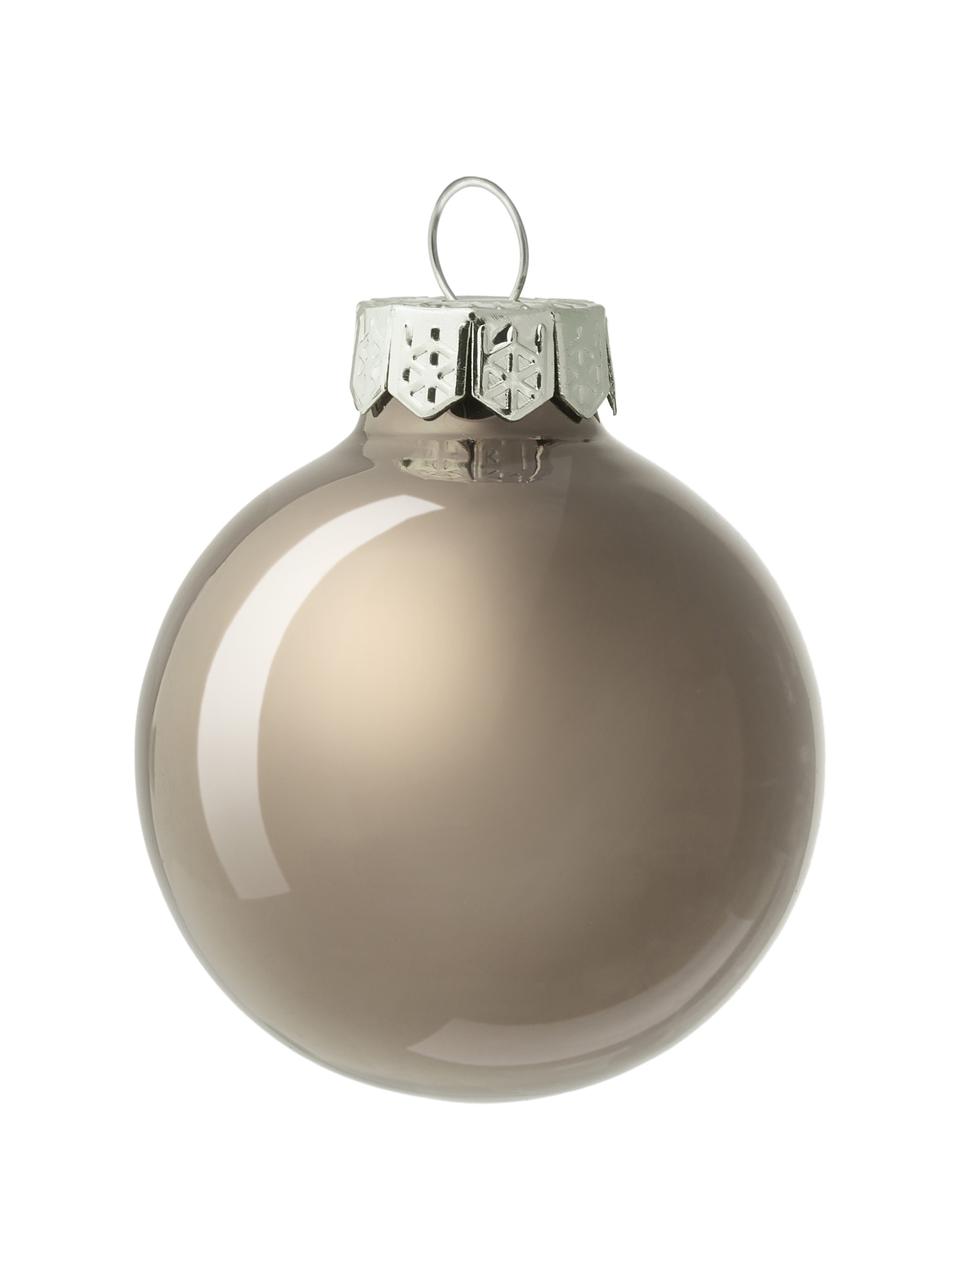 Kerstballenset Evergreen, 6 stuks, Lichtgrijs, Ø 4 x H 4 cm, 16 stuks